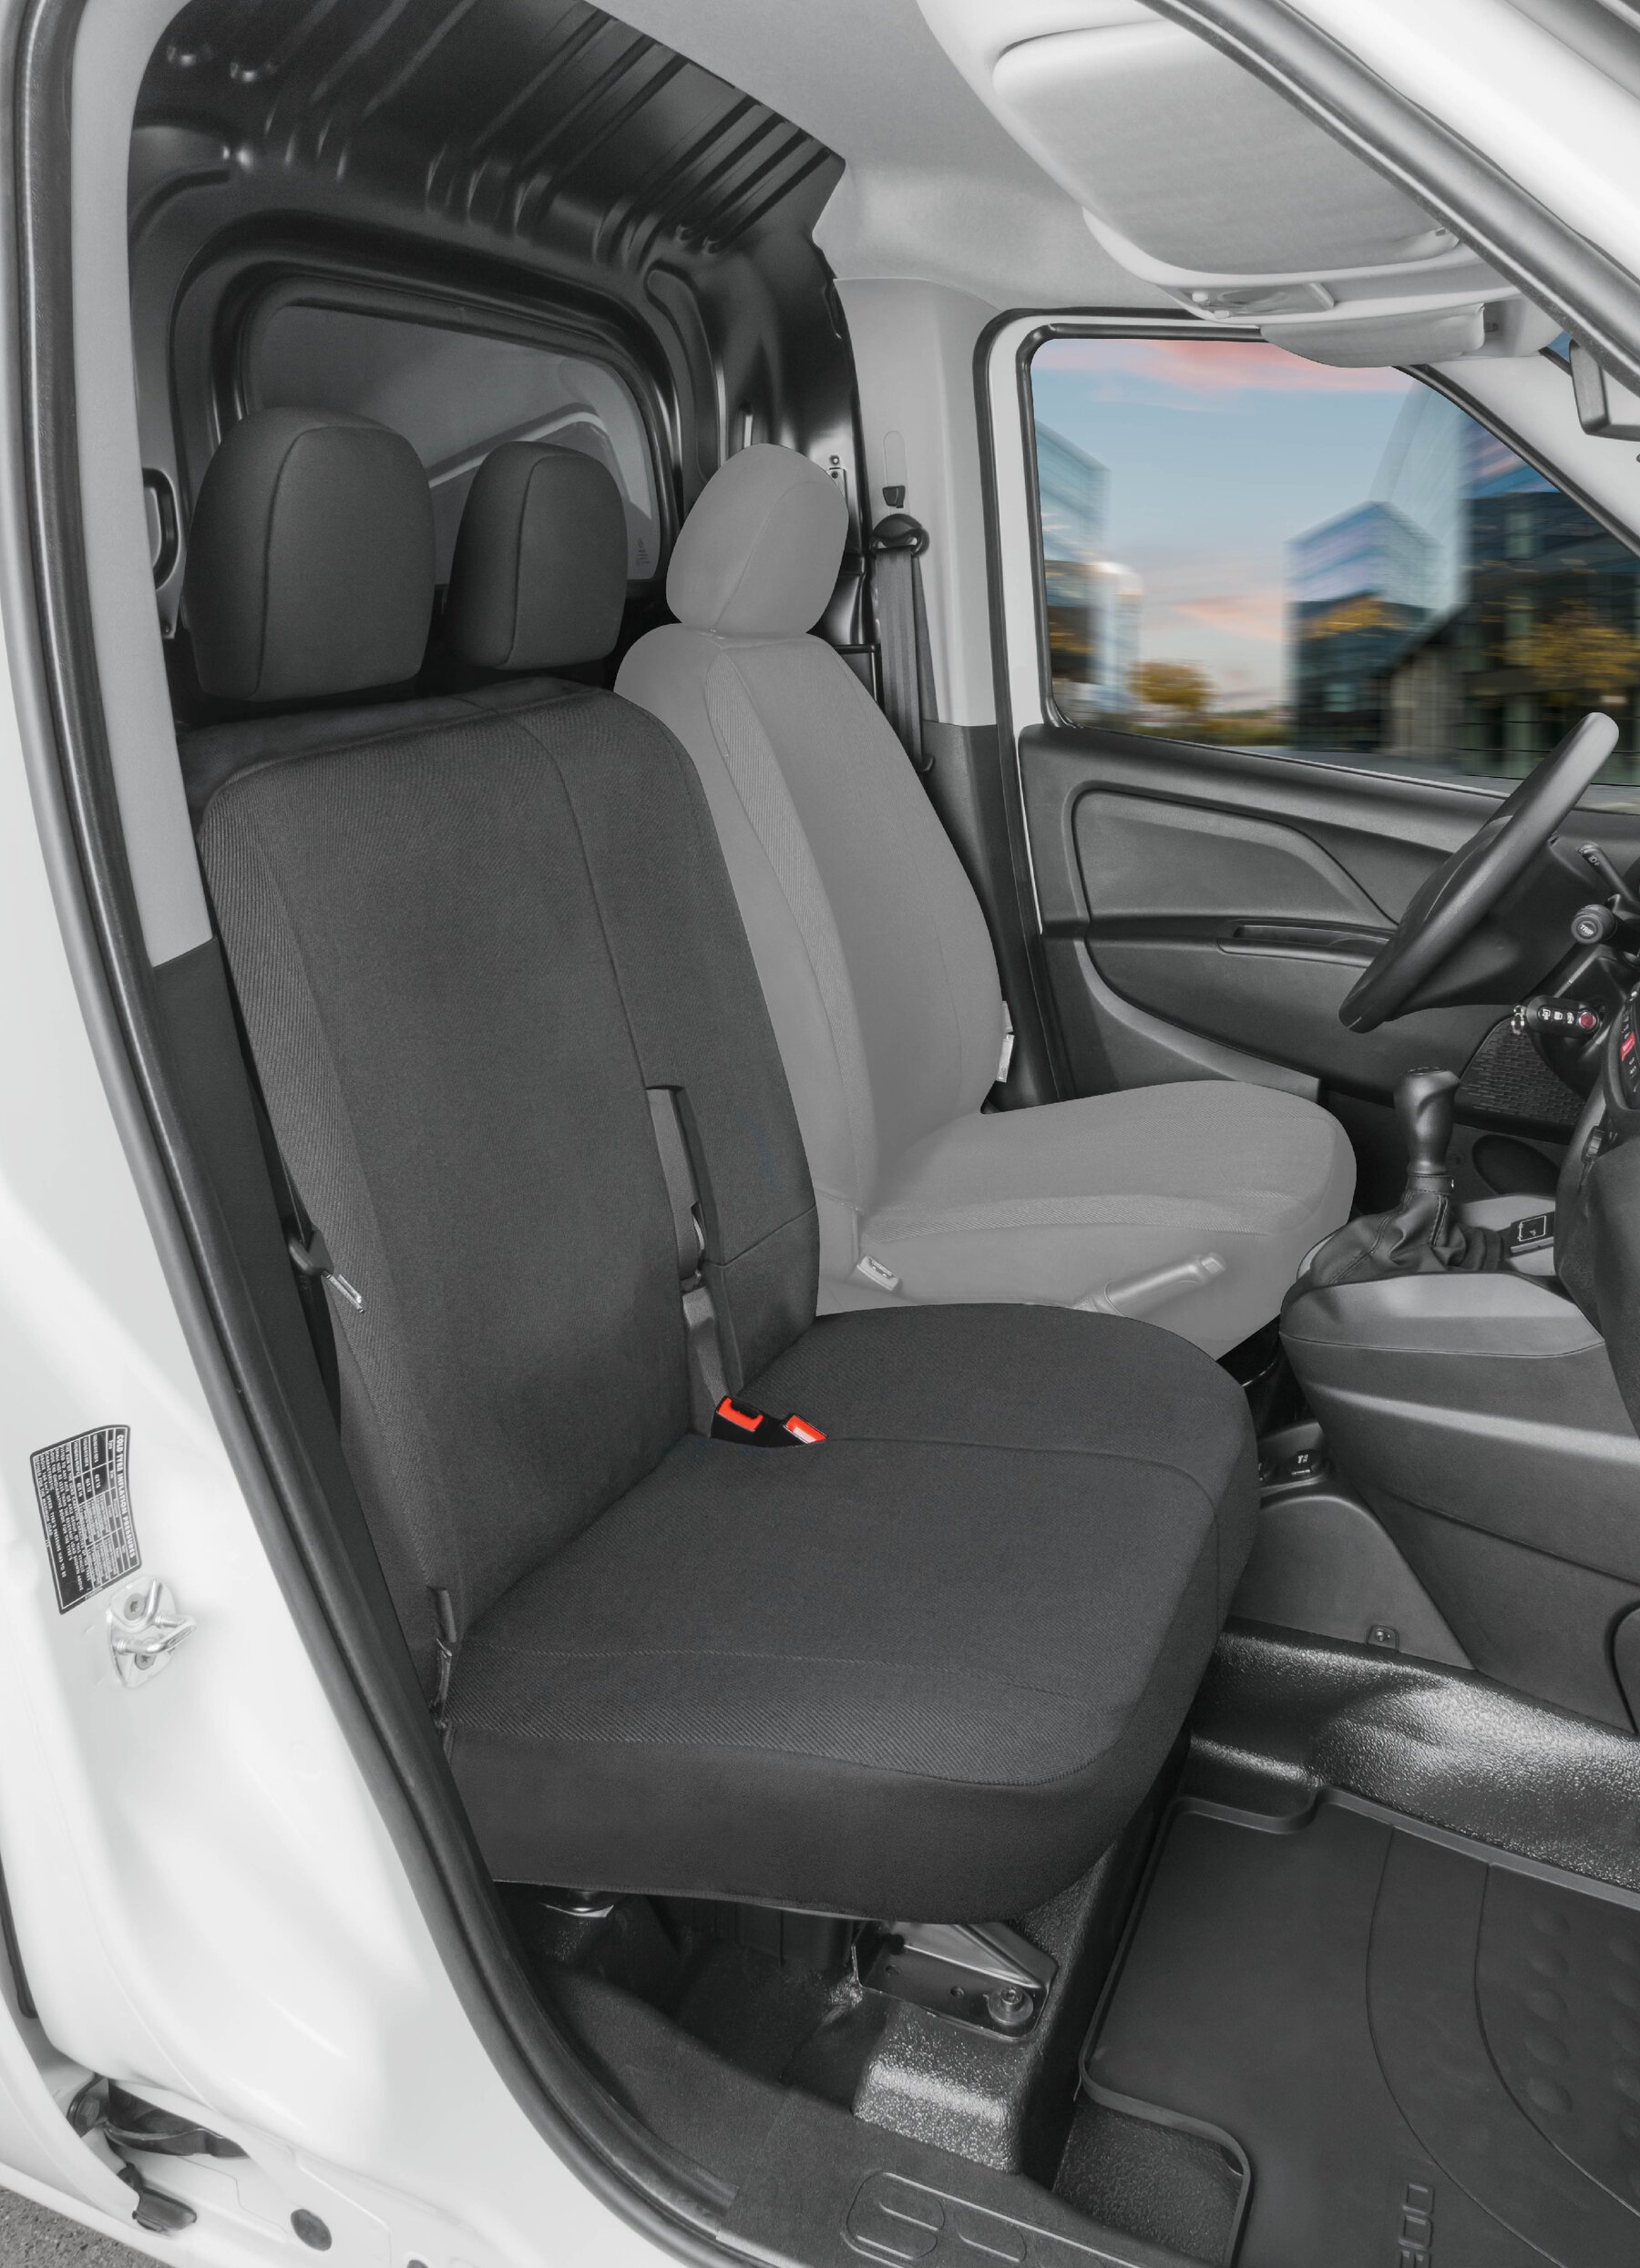 Passform Sitzbezug aus Stoff kompatibel mit Ford Transit Connect, Doppelbank vorne